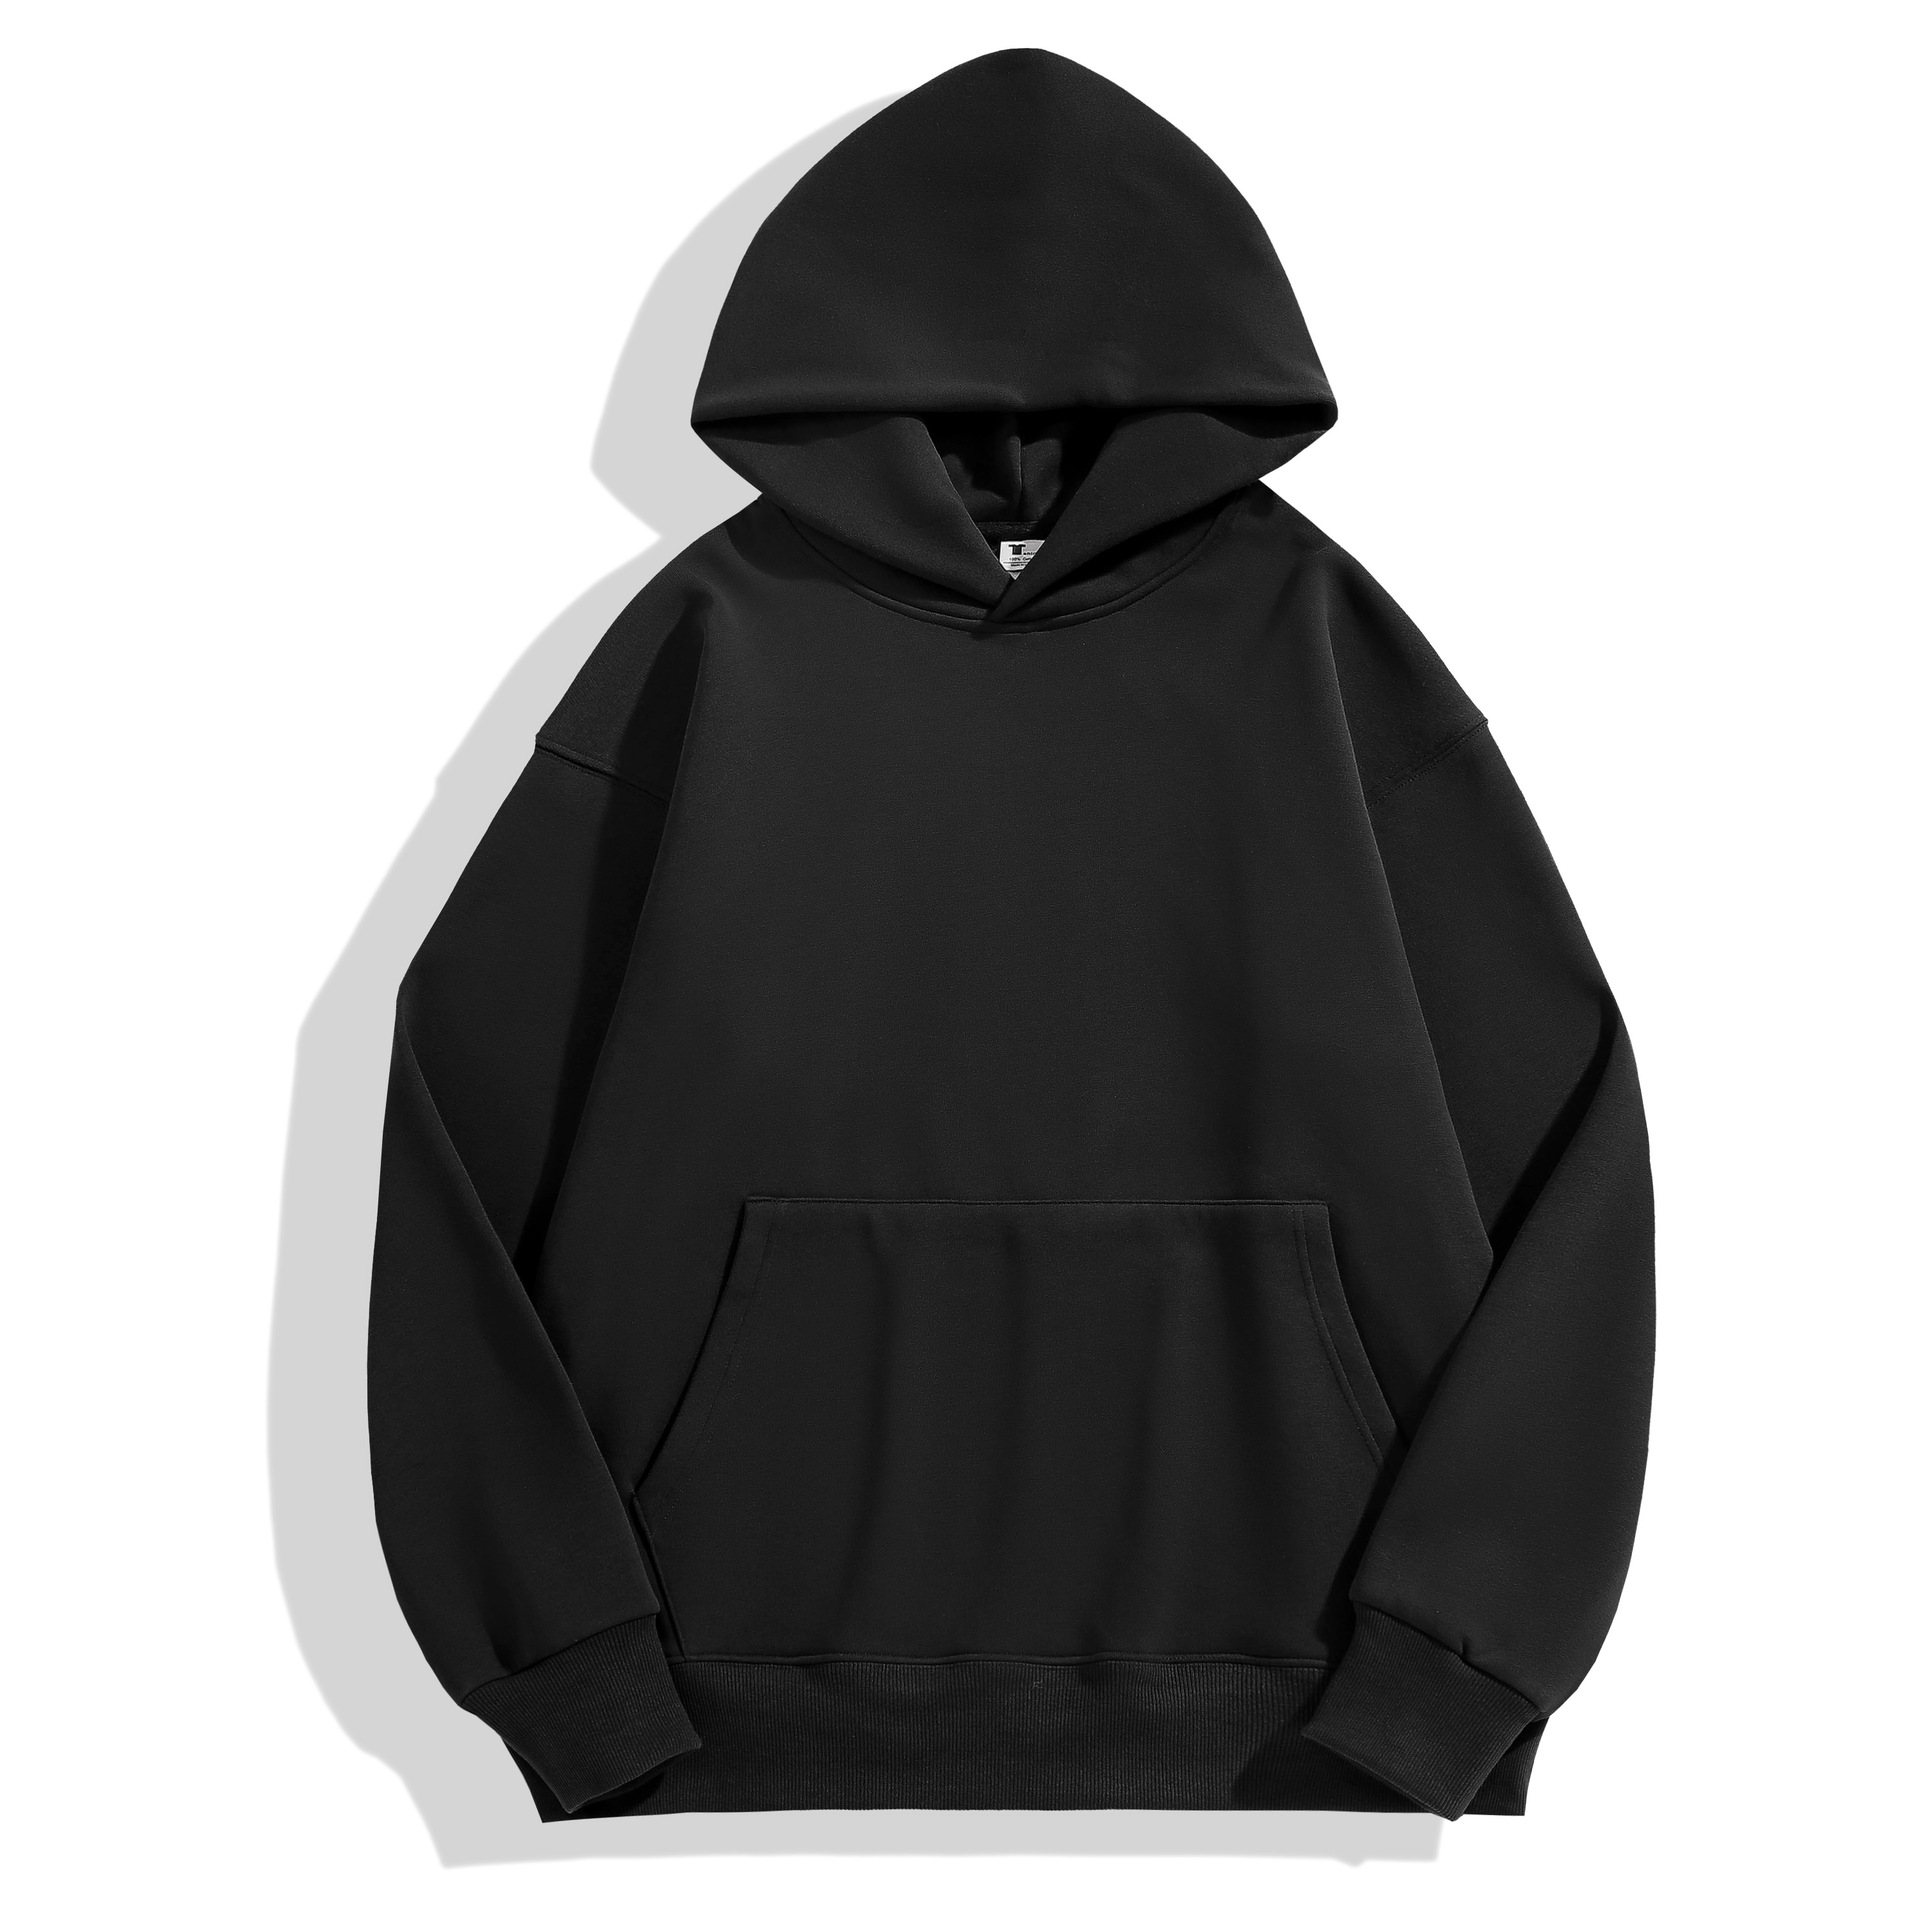 bulk order custom hoodies